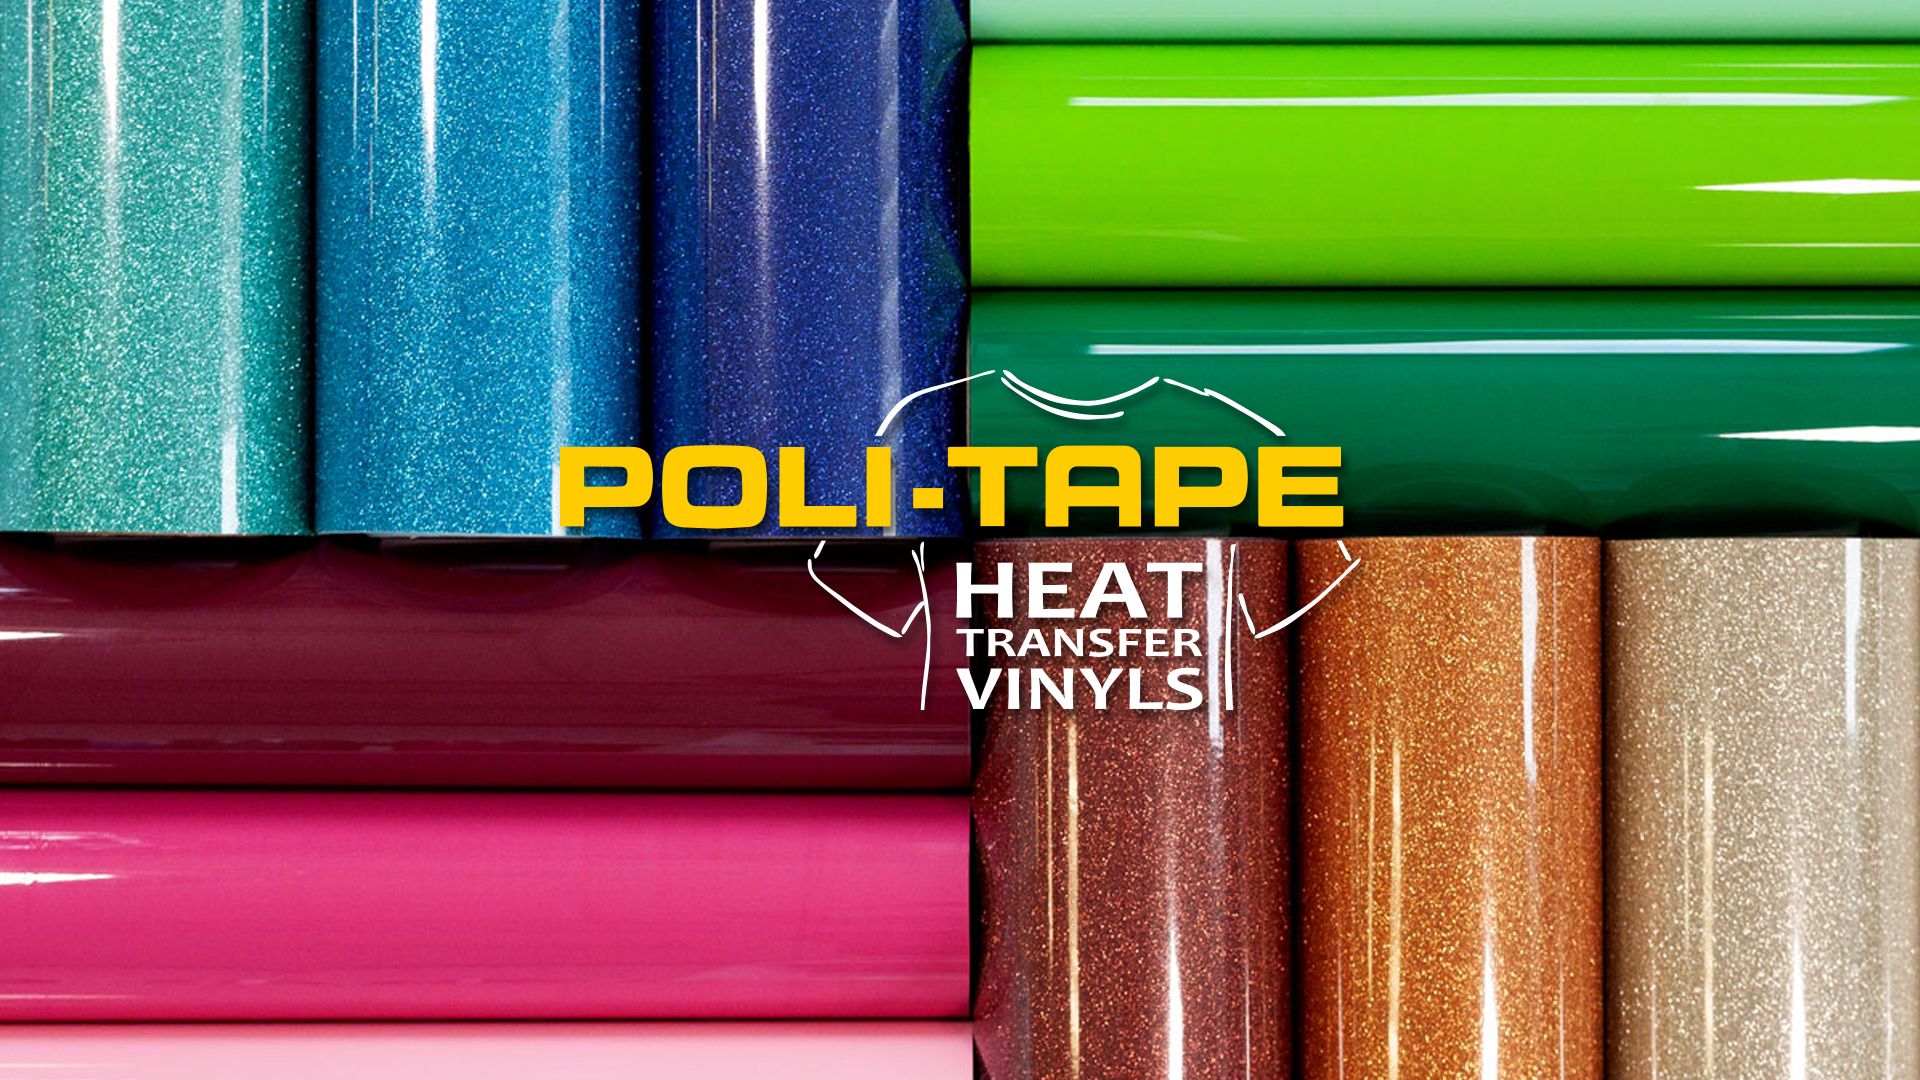 Heat Transfer Vinyls made by POLI-TAPE